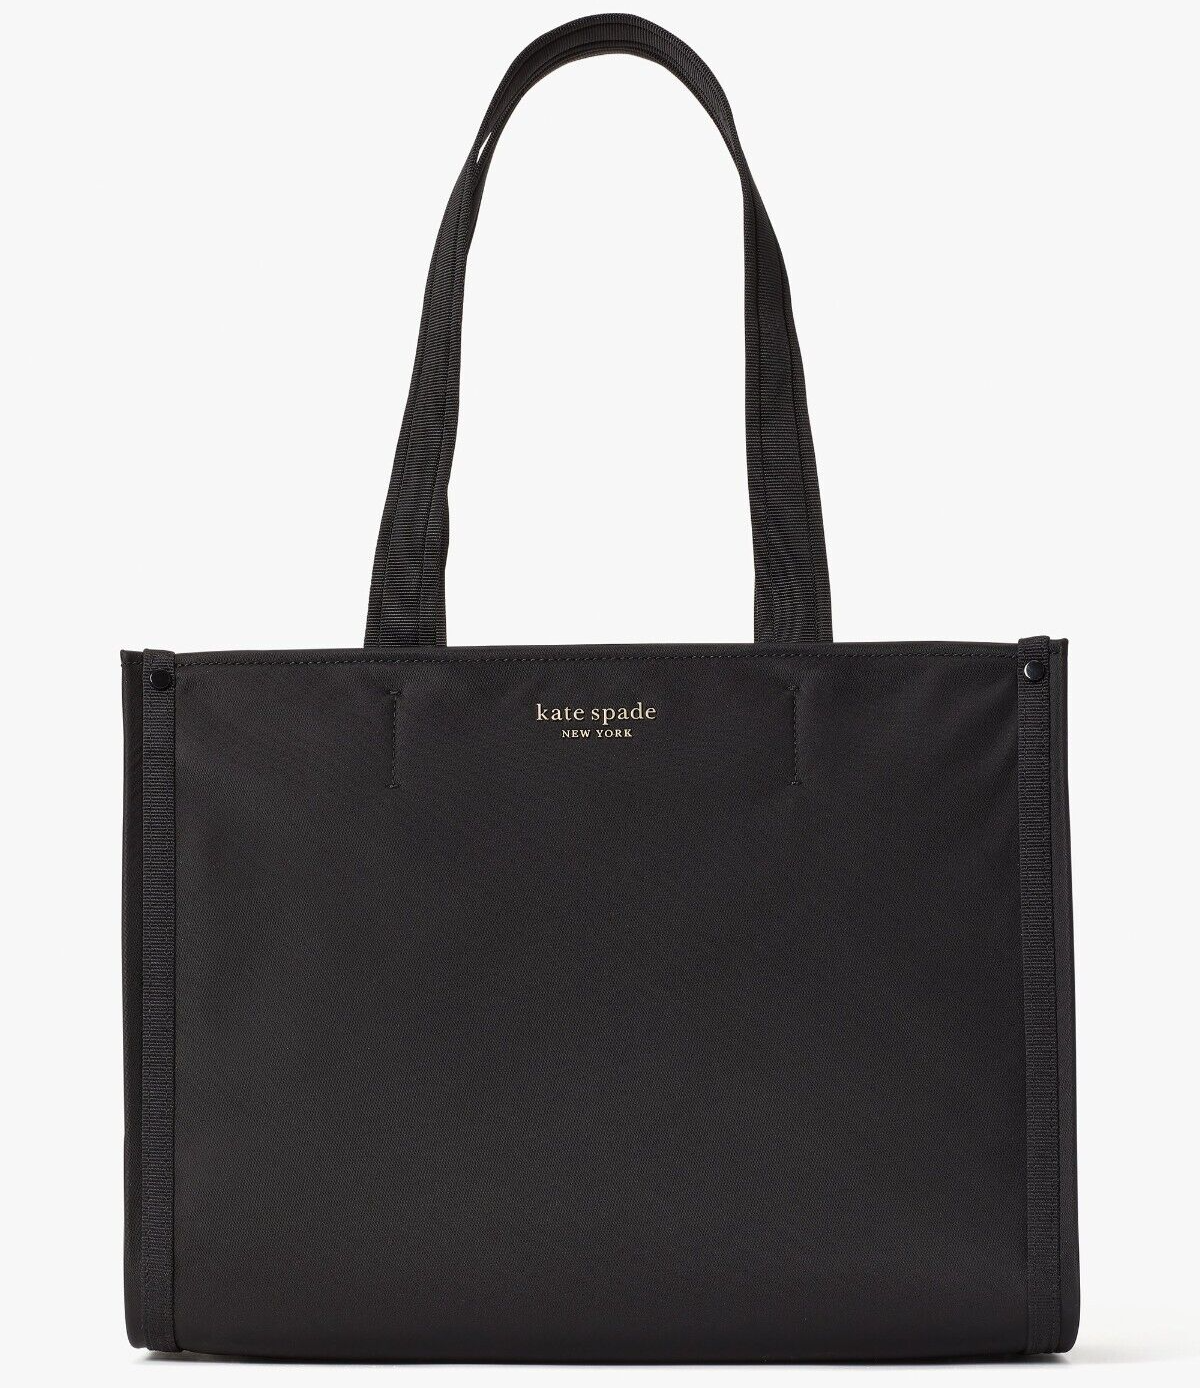 Primary image for Kate Spade Staci Black Saffiano Leather Tote Bag KG473 Purse Handbag NWT $359